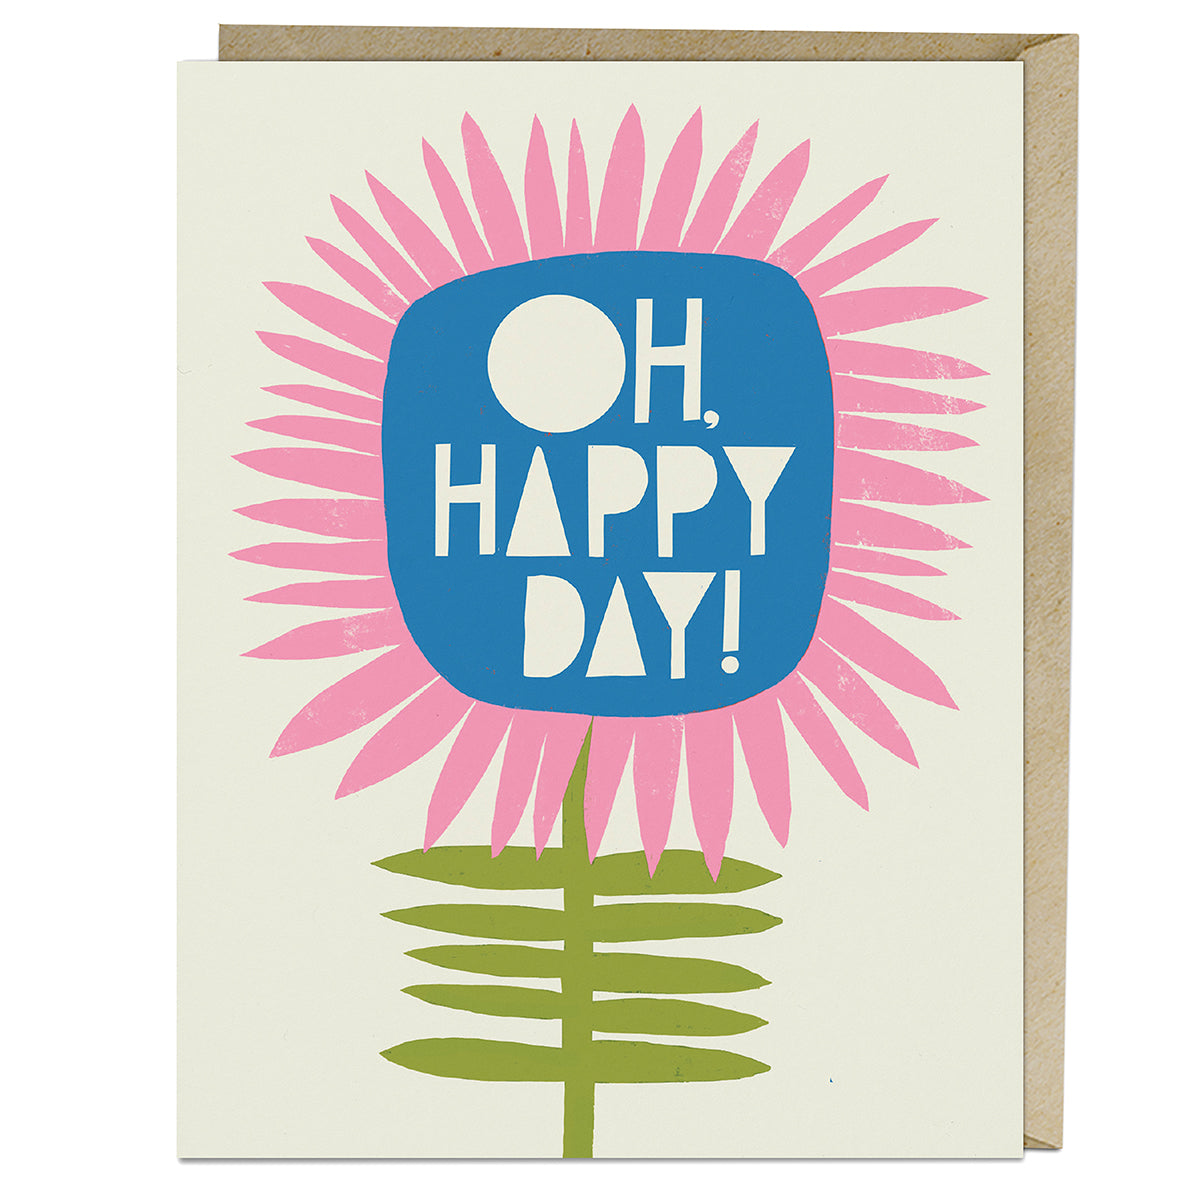 Wonderful Day - Greeting Card